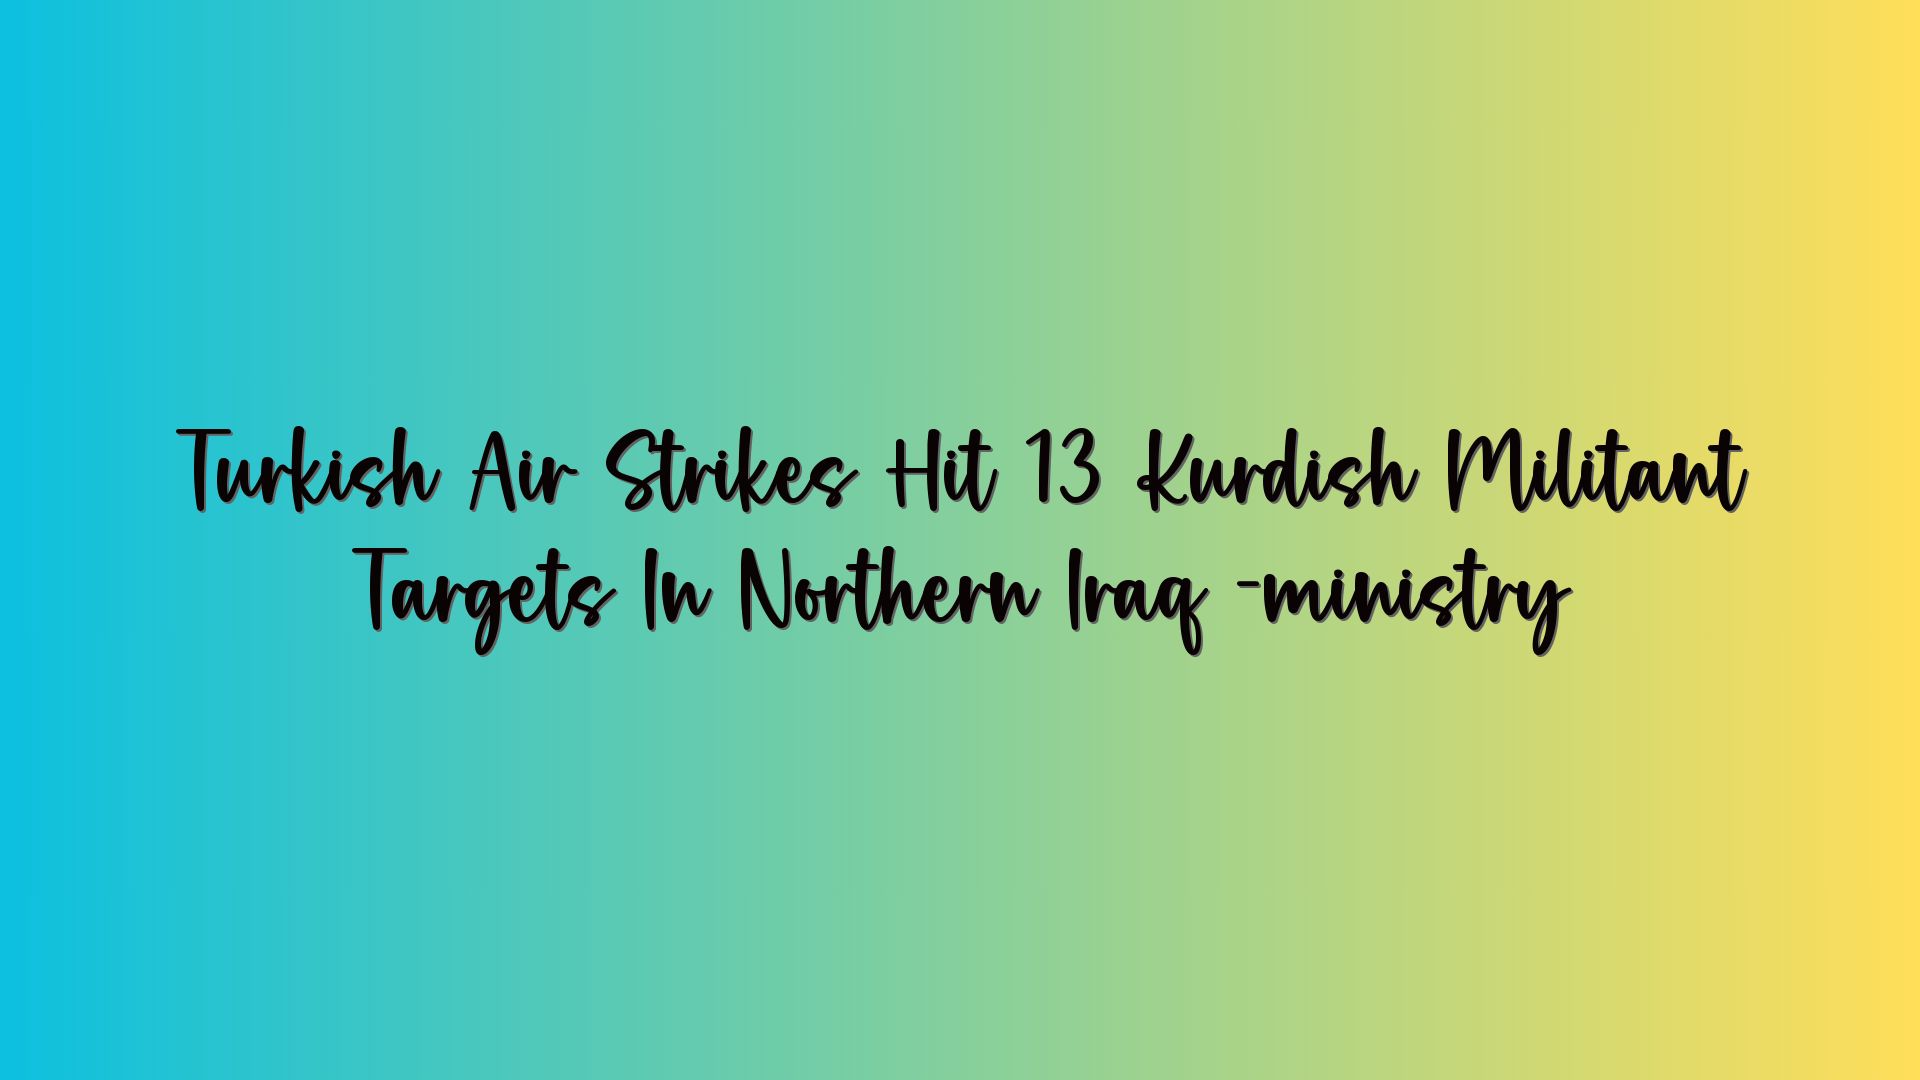 Turkish Air Strikes Hit 13 Kurdish Militant Targets In Northern Iraq -ministry